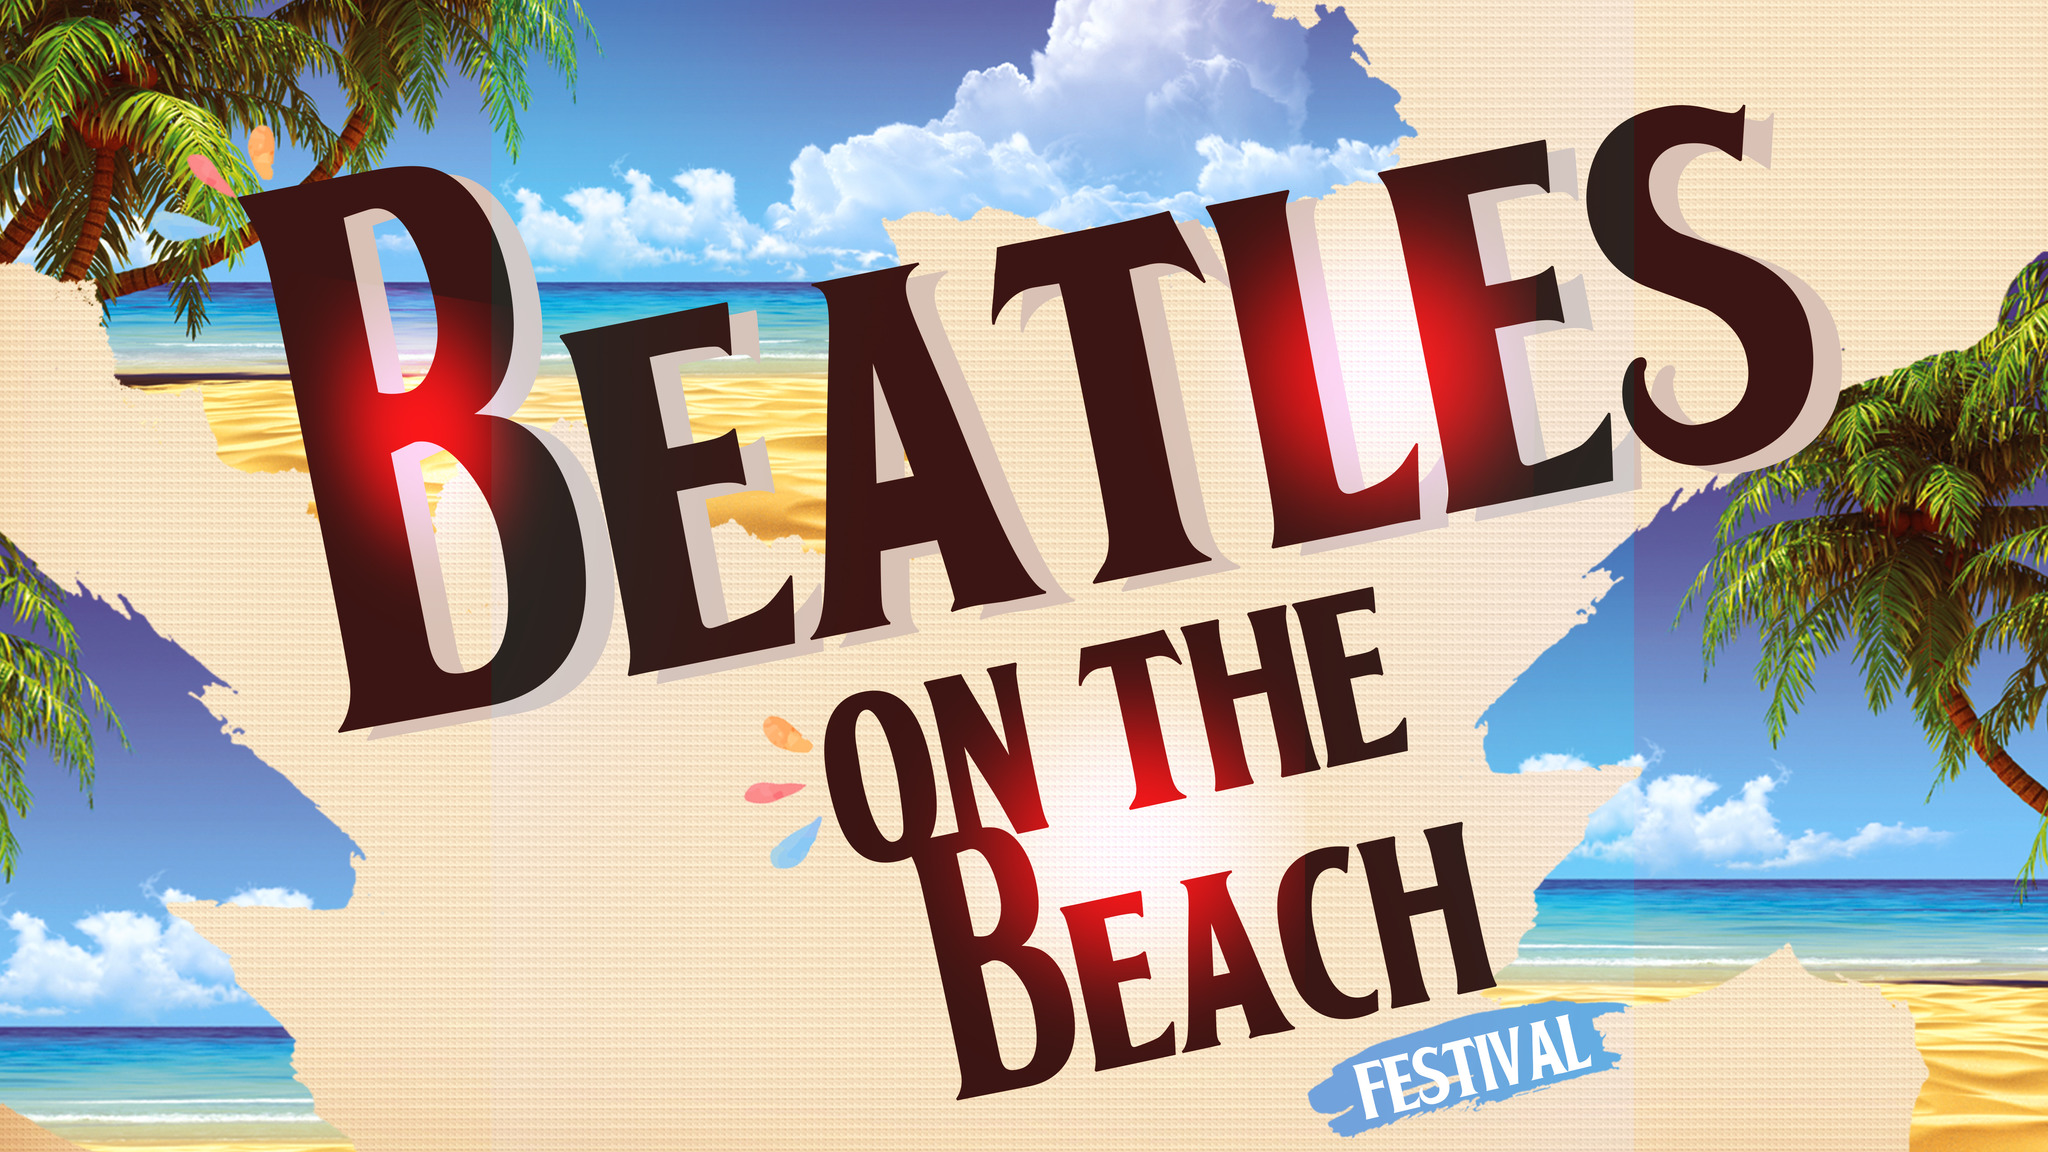 The International Beatles on the Beach Festival Billets Dates d